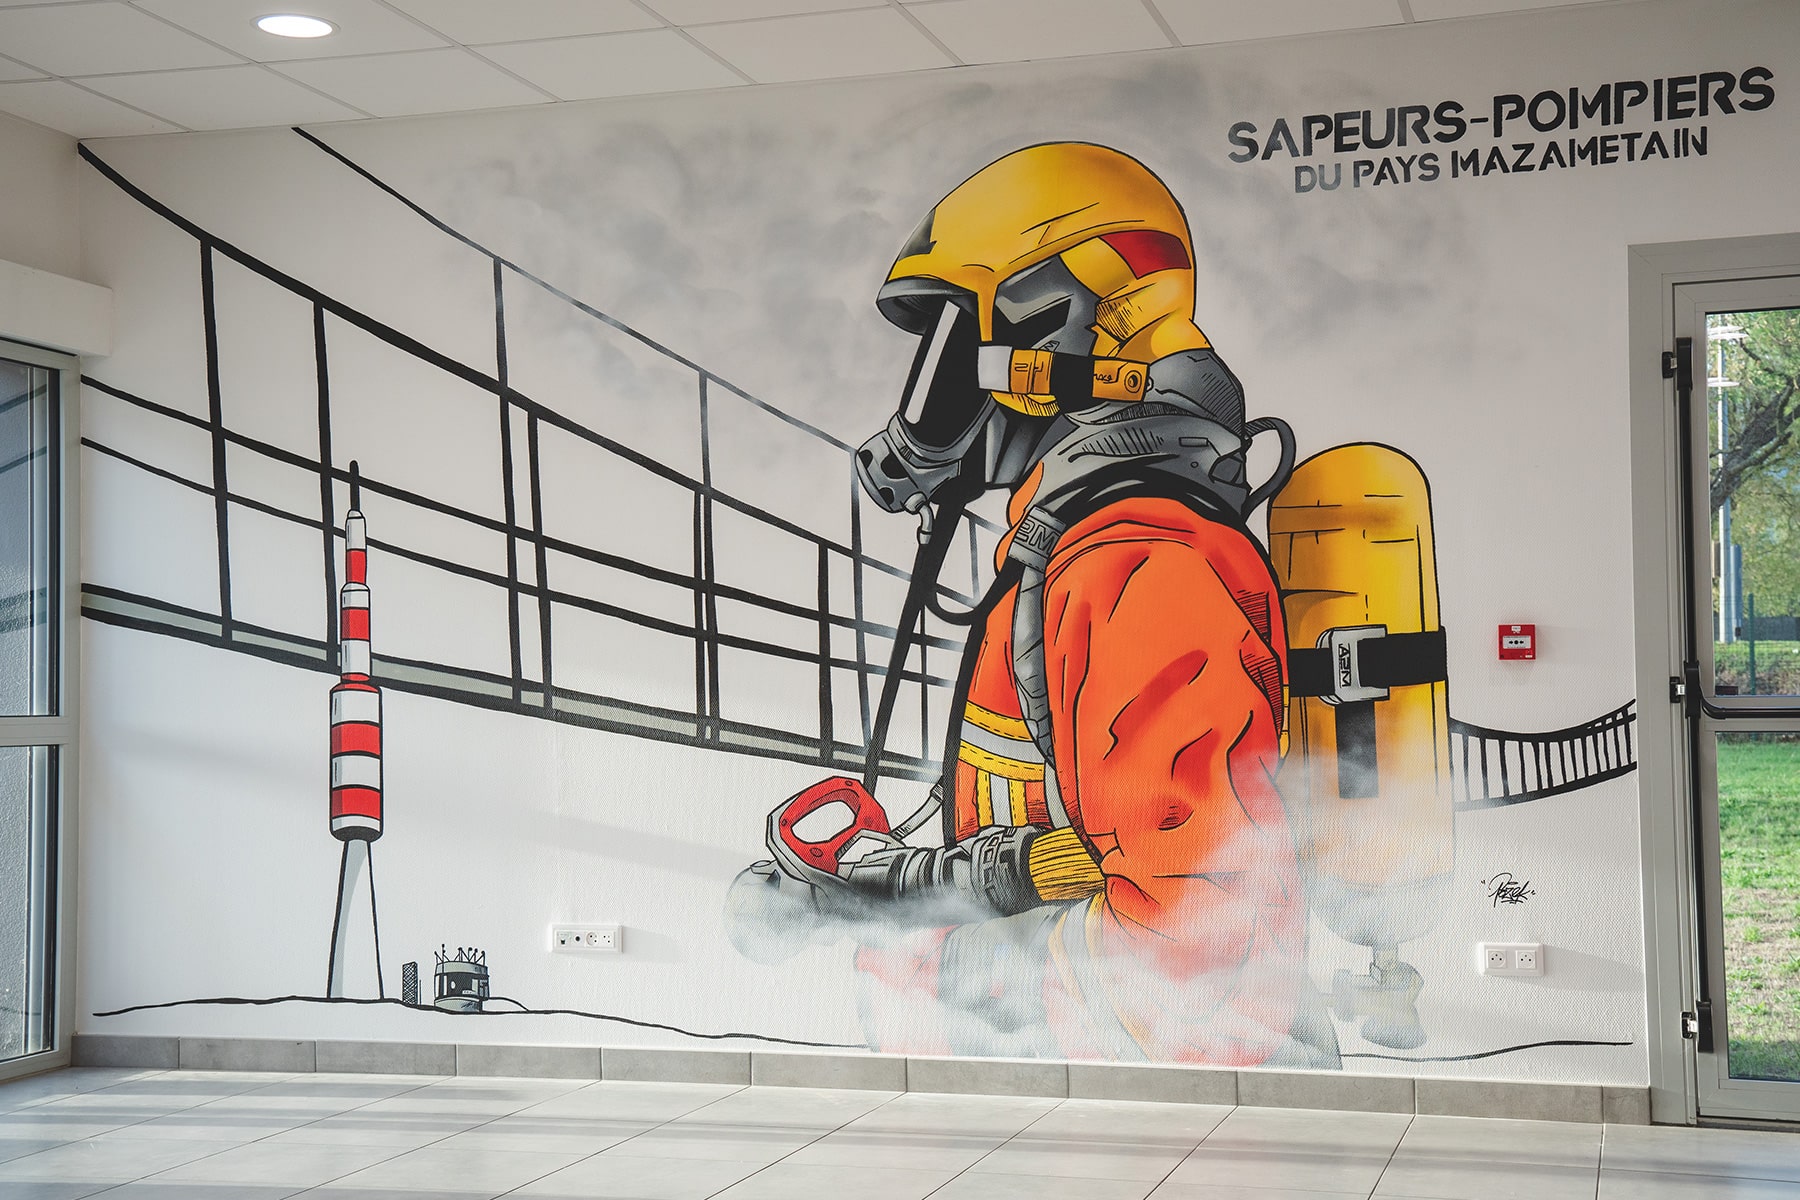 pozek-graffiti-sapeurs-pompiers-mazamet